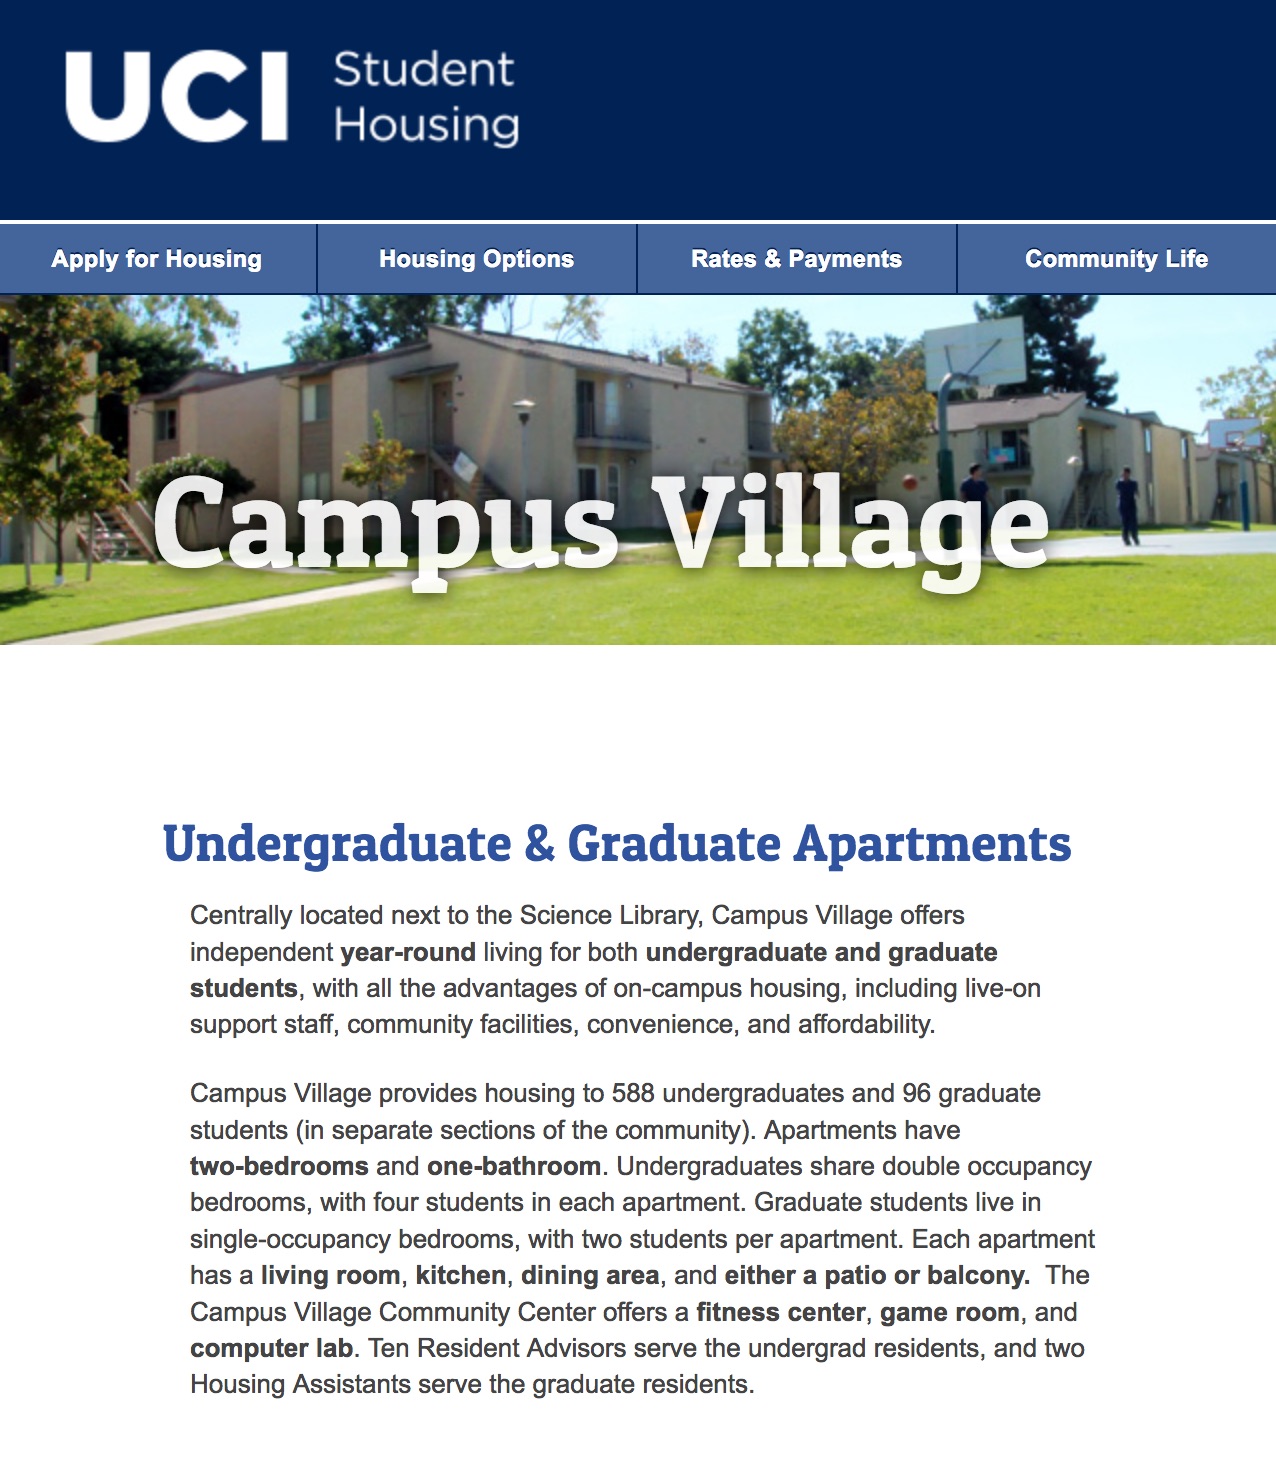 https://www.davisvanguard.org/wp-content/uploads/2017/05/UC-Irvine-On-Campus-Apartment-Description.jpg